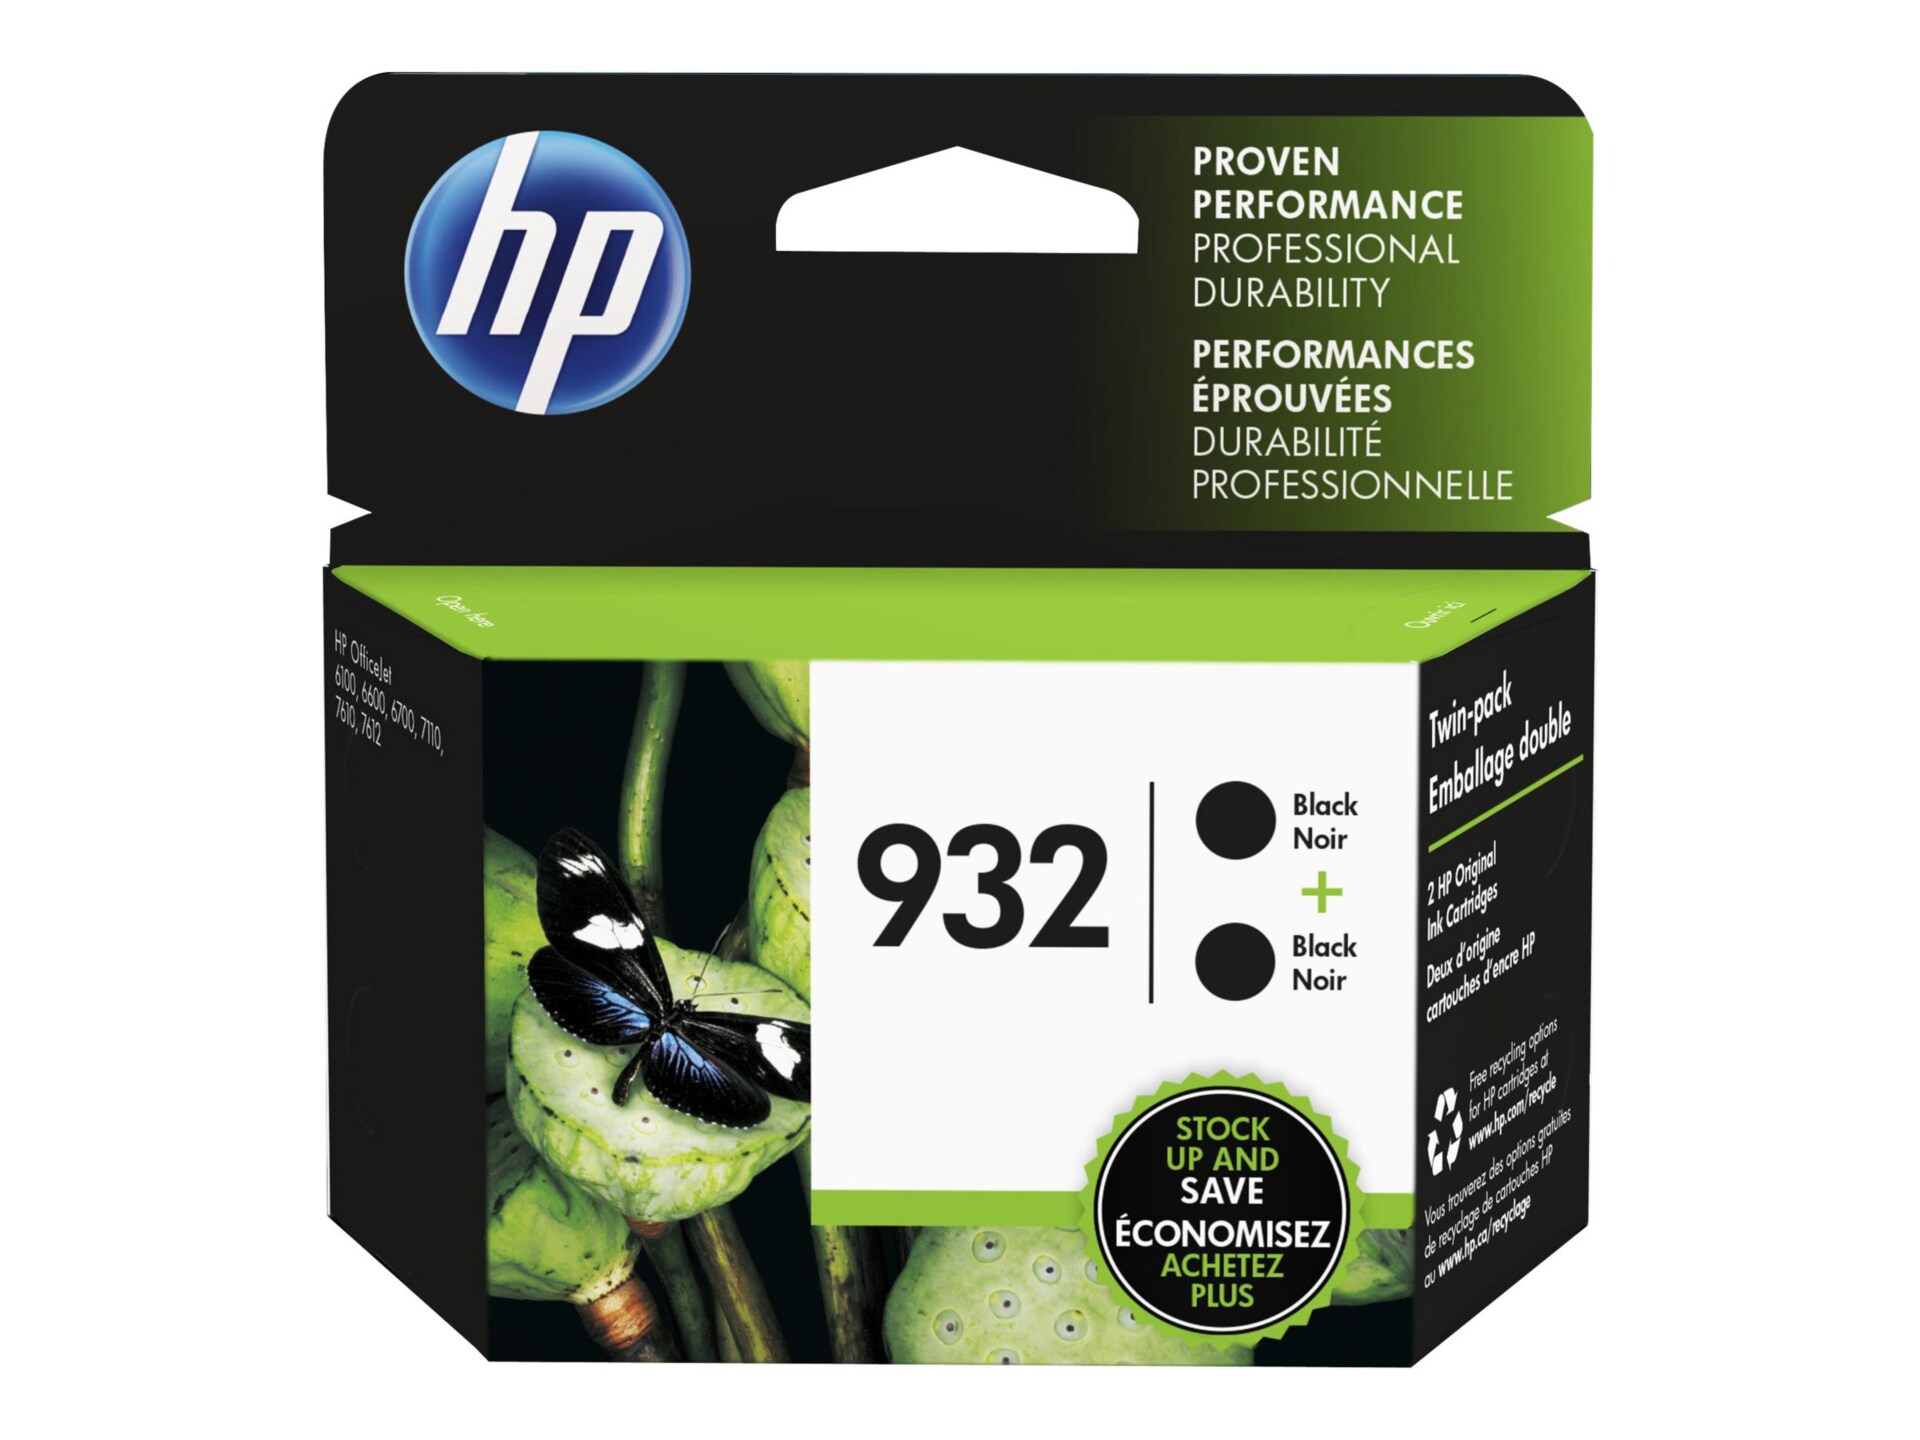 HP 932 - 2-pack - black - original - ink cartridge